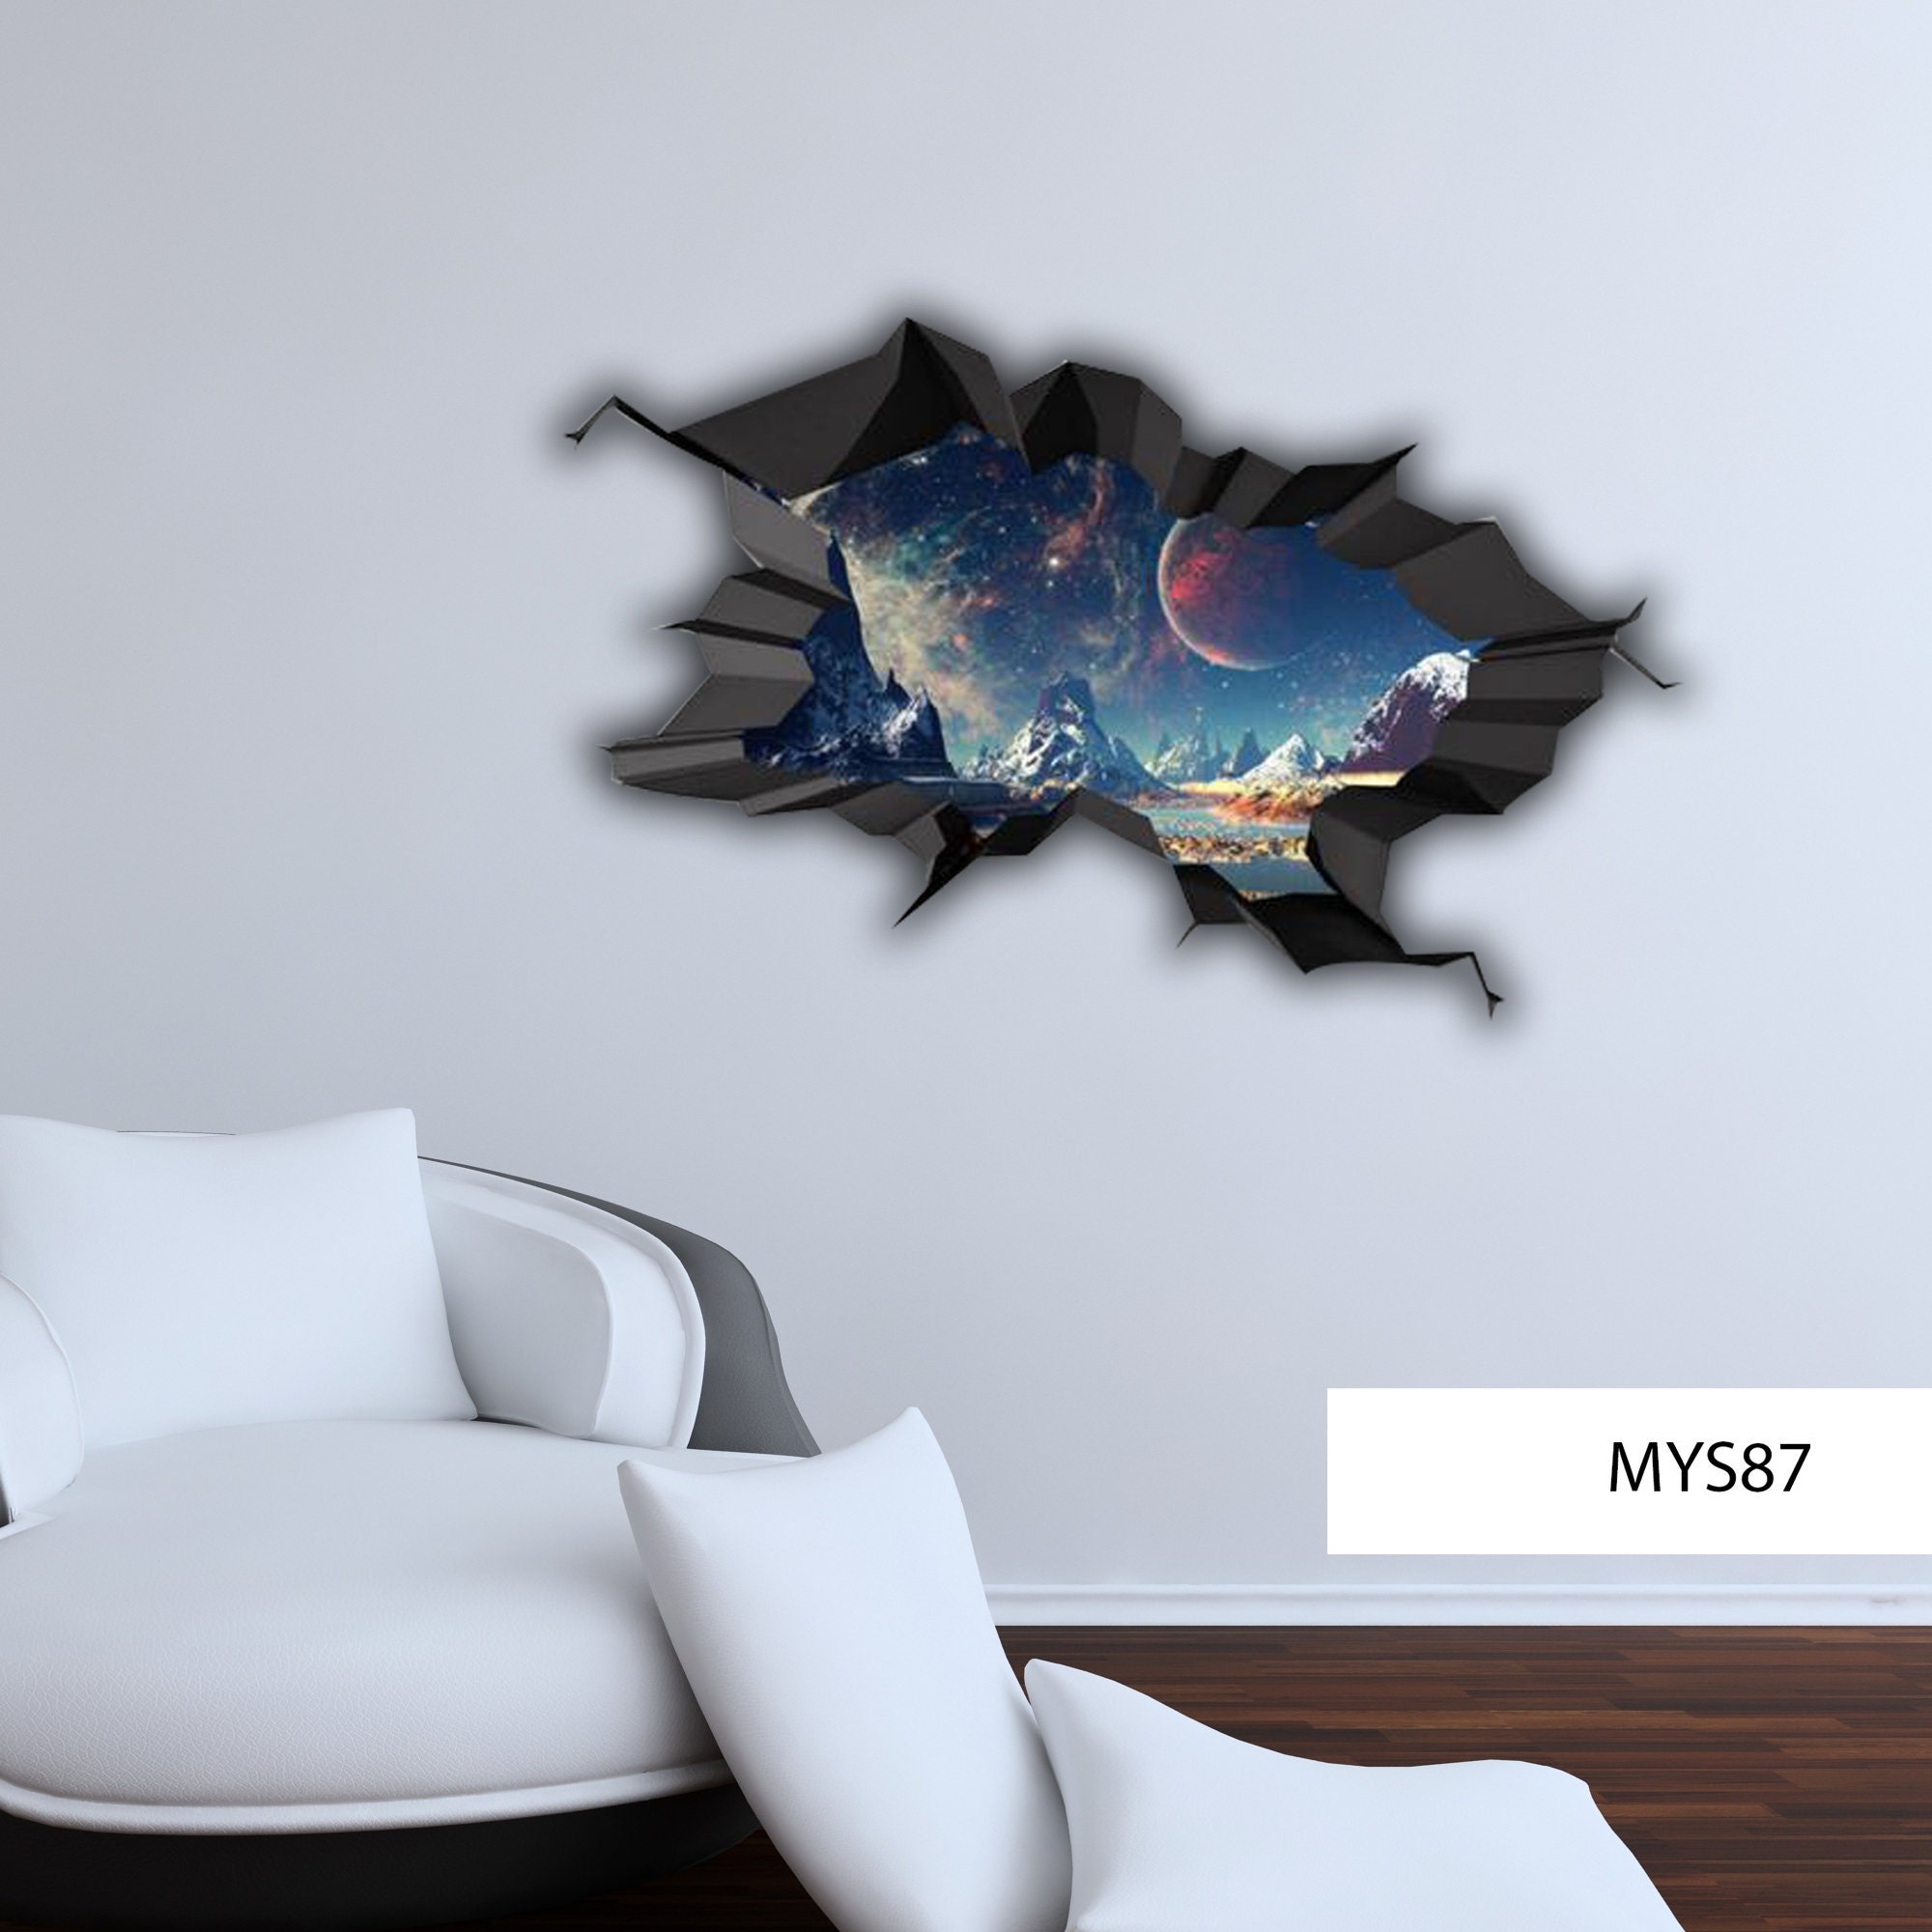 MOON PLANET GALAXY STARS BOYS BEDROOM Z313 ASTRONAUT WALL STICKER 3D LOOK 